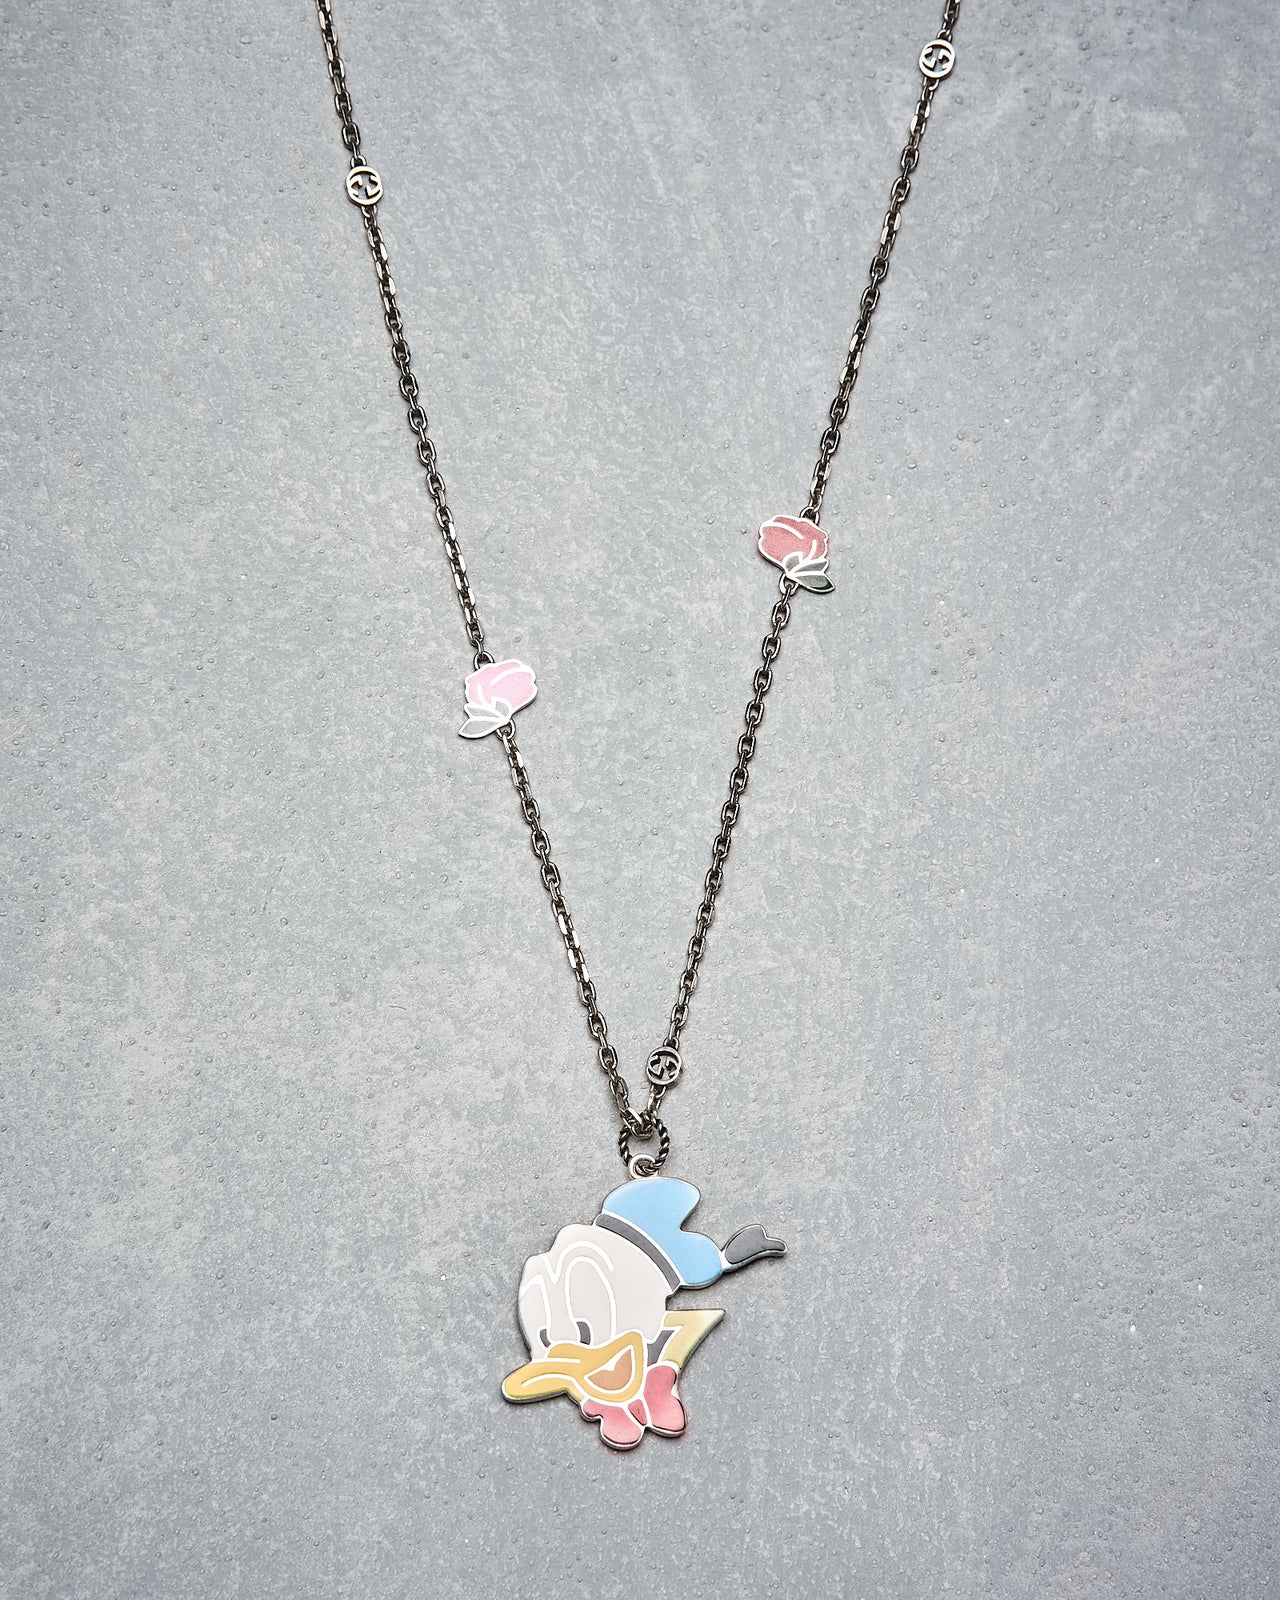 Gucci x Disney Donald duck necklace